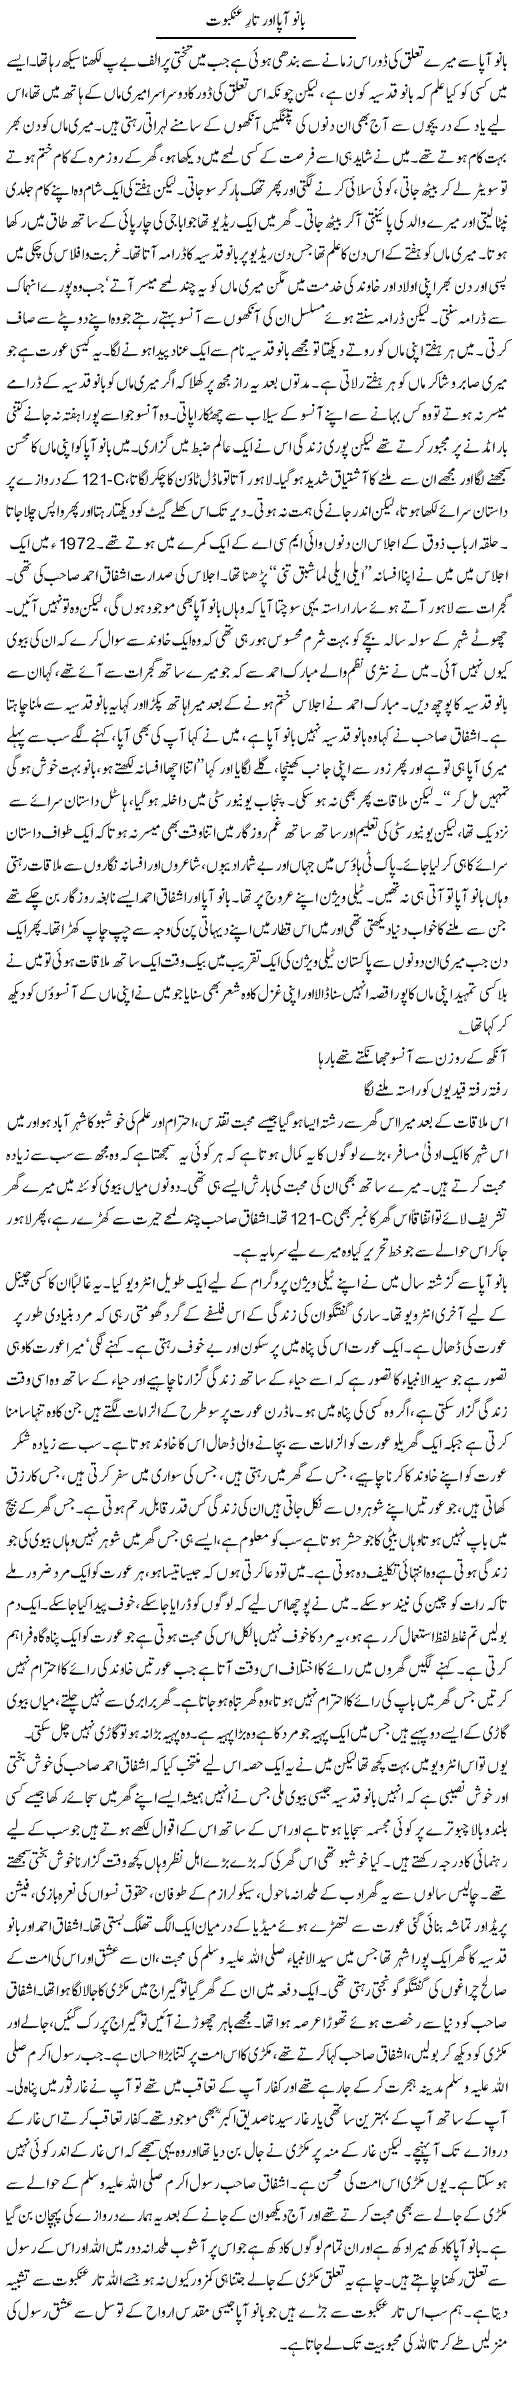 Bano Aapa Aur Taare Ankaboot | Orya Maqbool Jan | Daily Urdu Columns